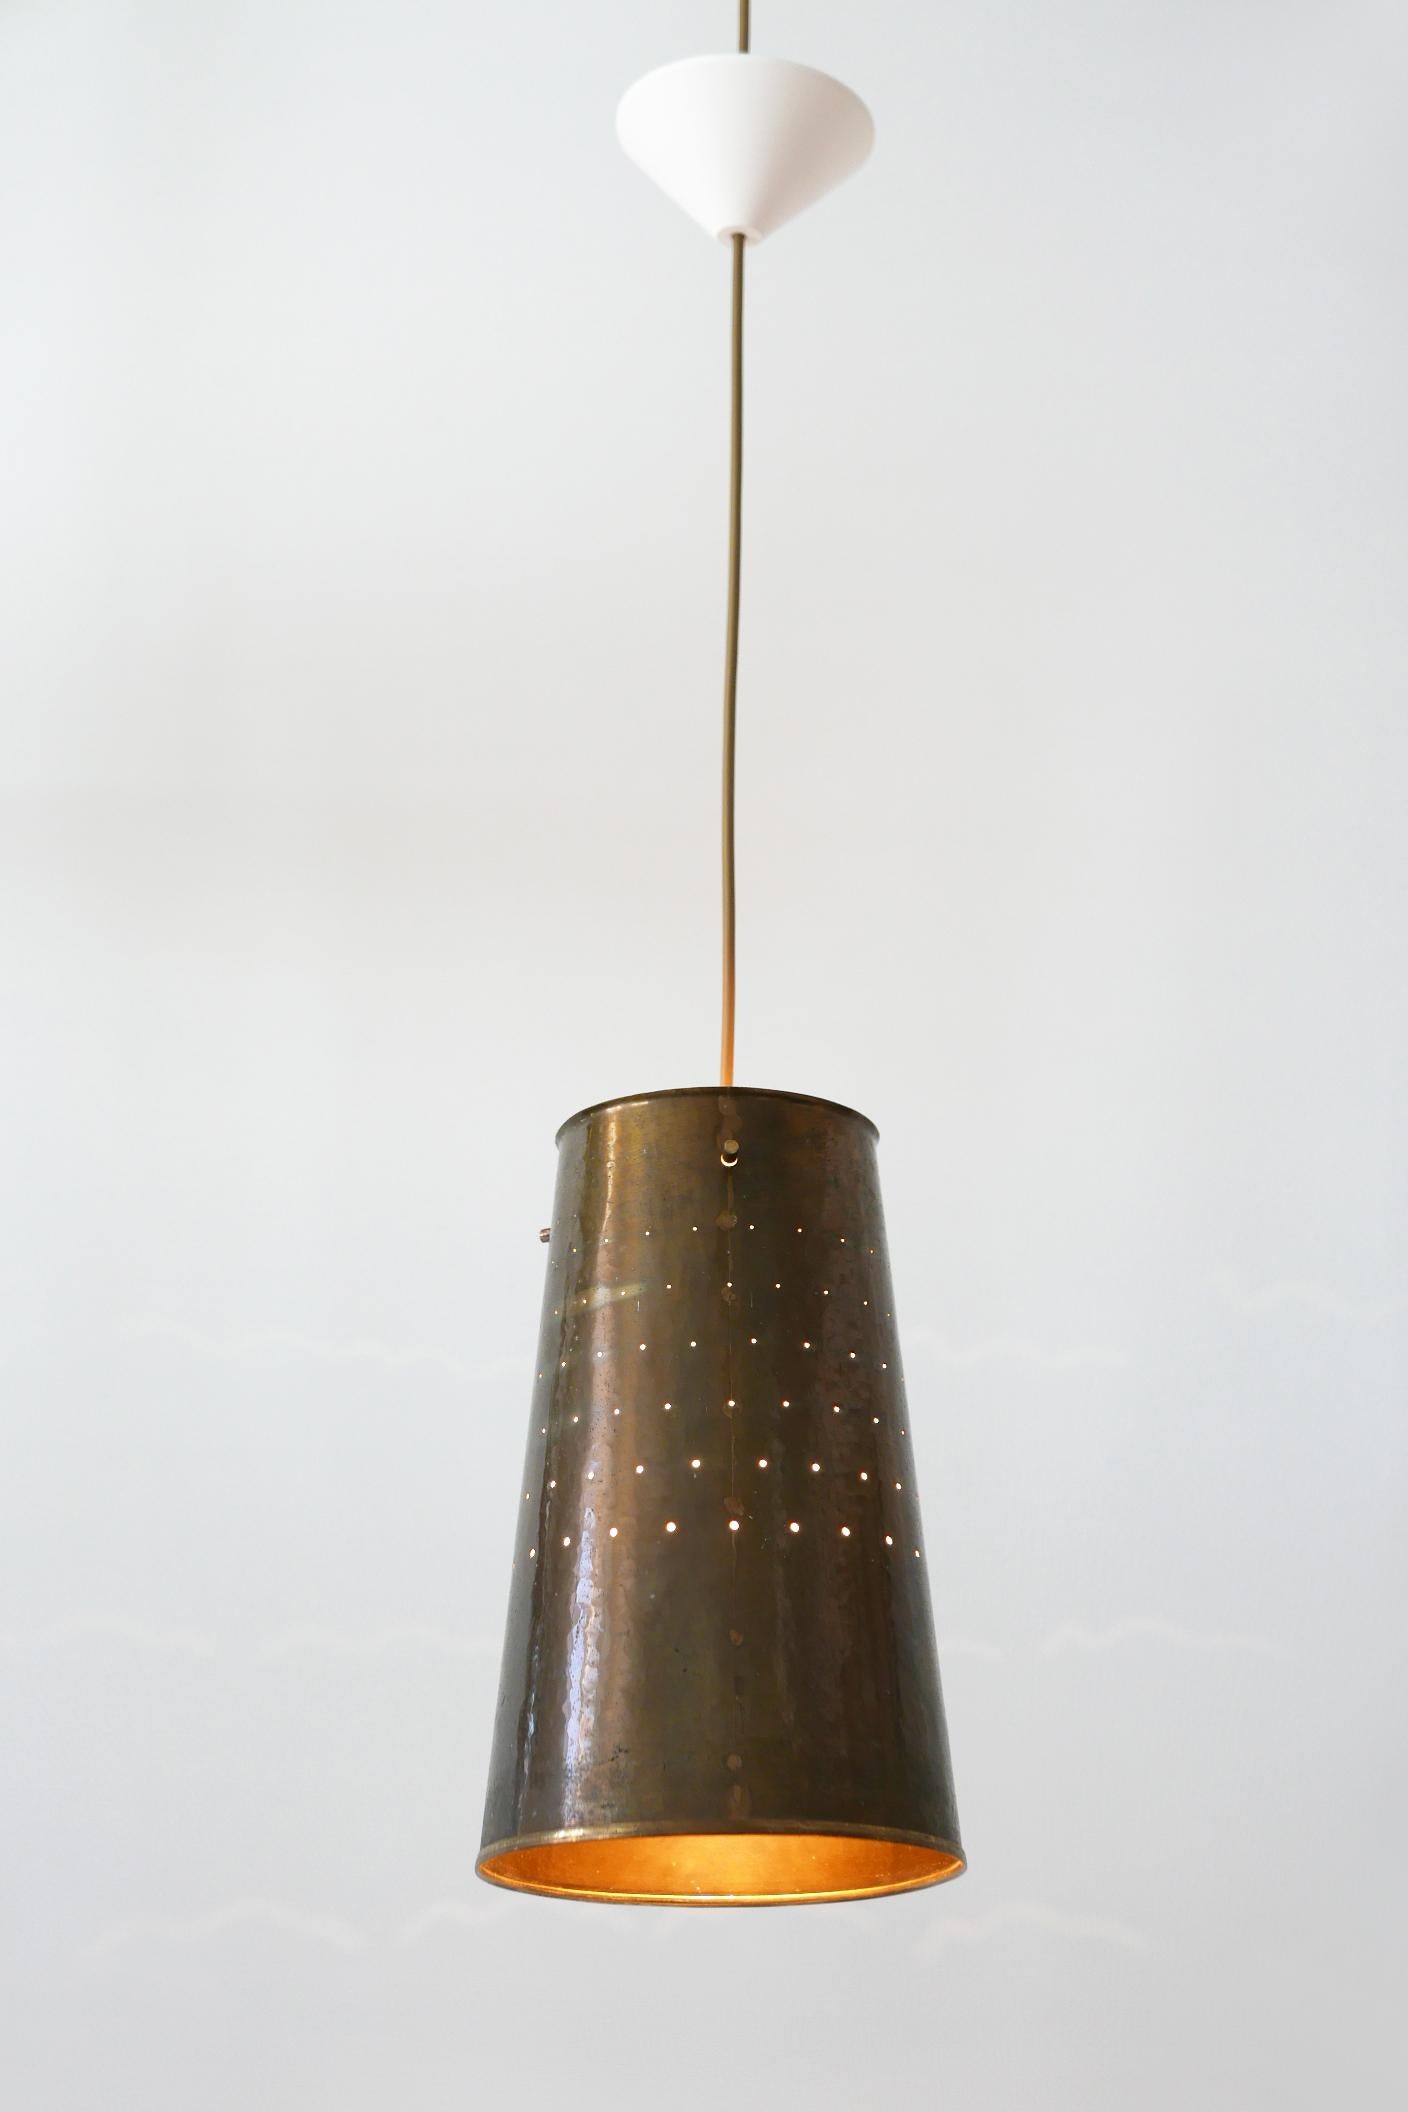 Anodized Rare and Elegant Mid-Century Modern Brass Pendant Lamp, 1950s, Germany